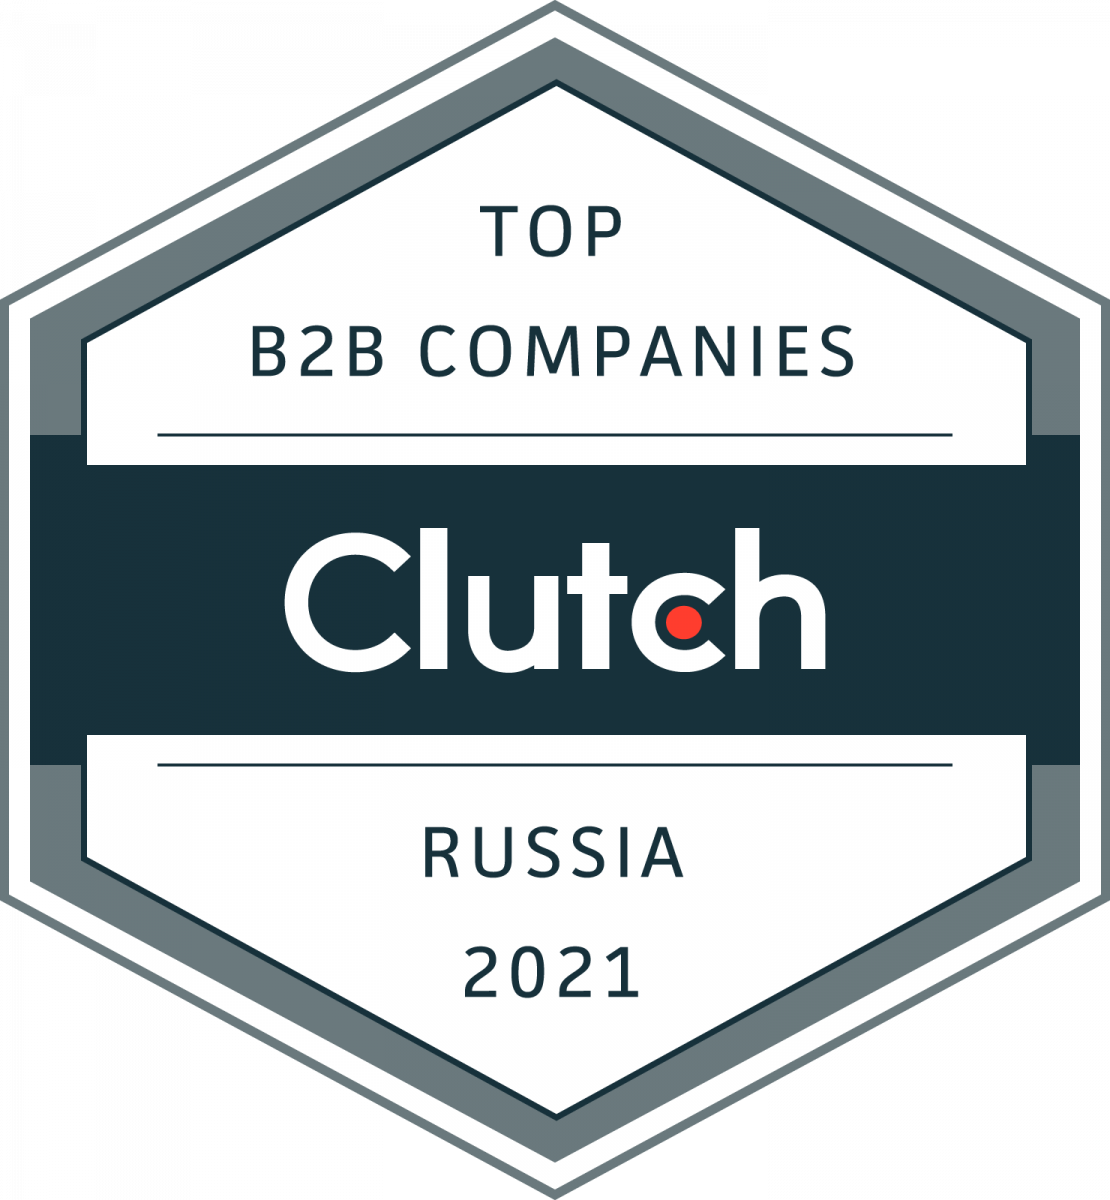 Top B2B Companies Russia